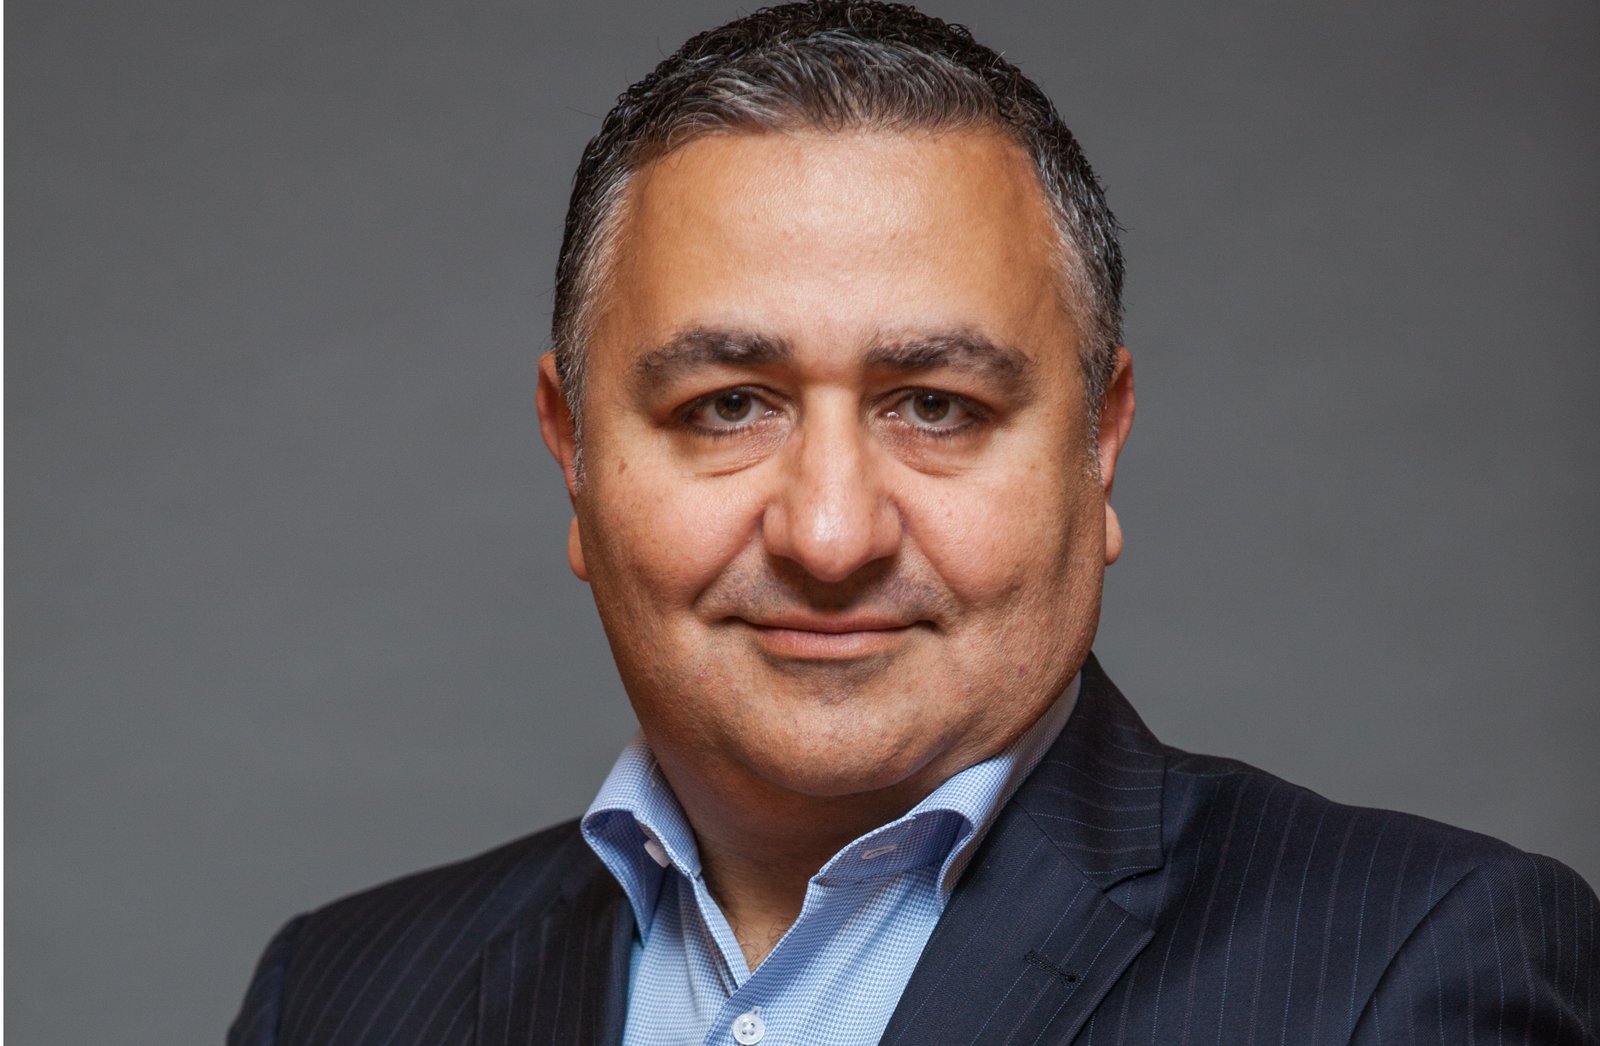 Habib Mahakian, the Vice President for Gulf and Pakistan at Dell EMC